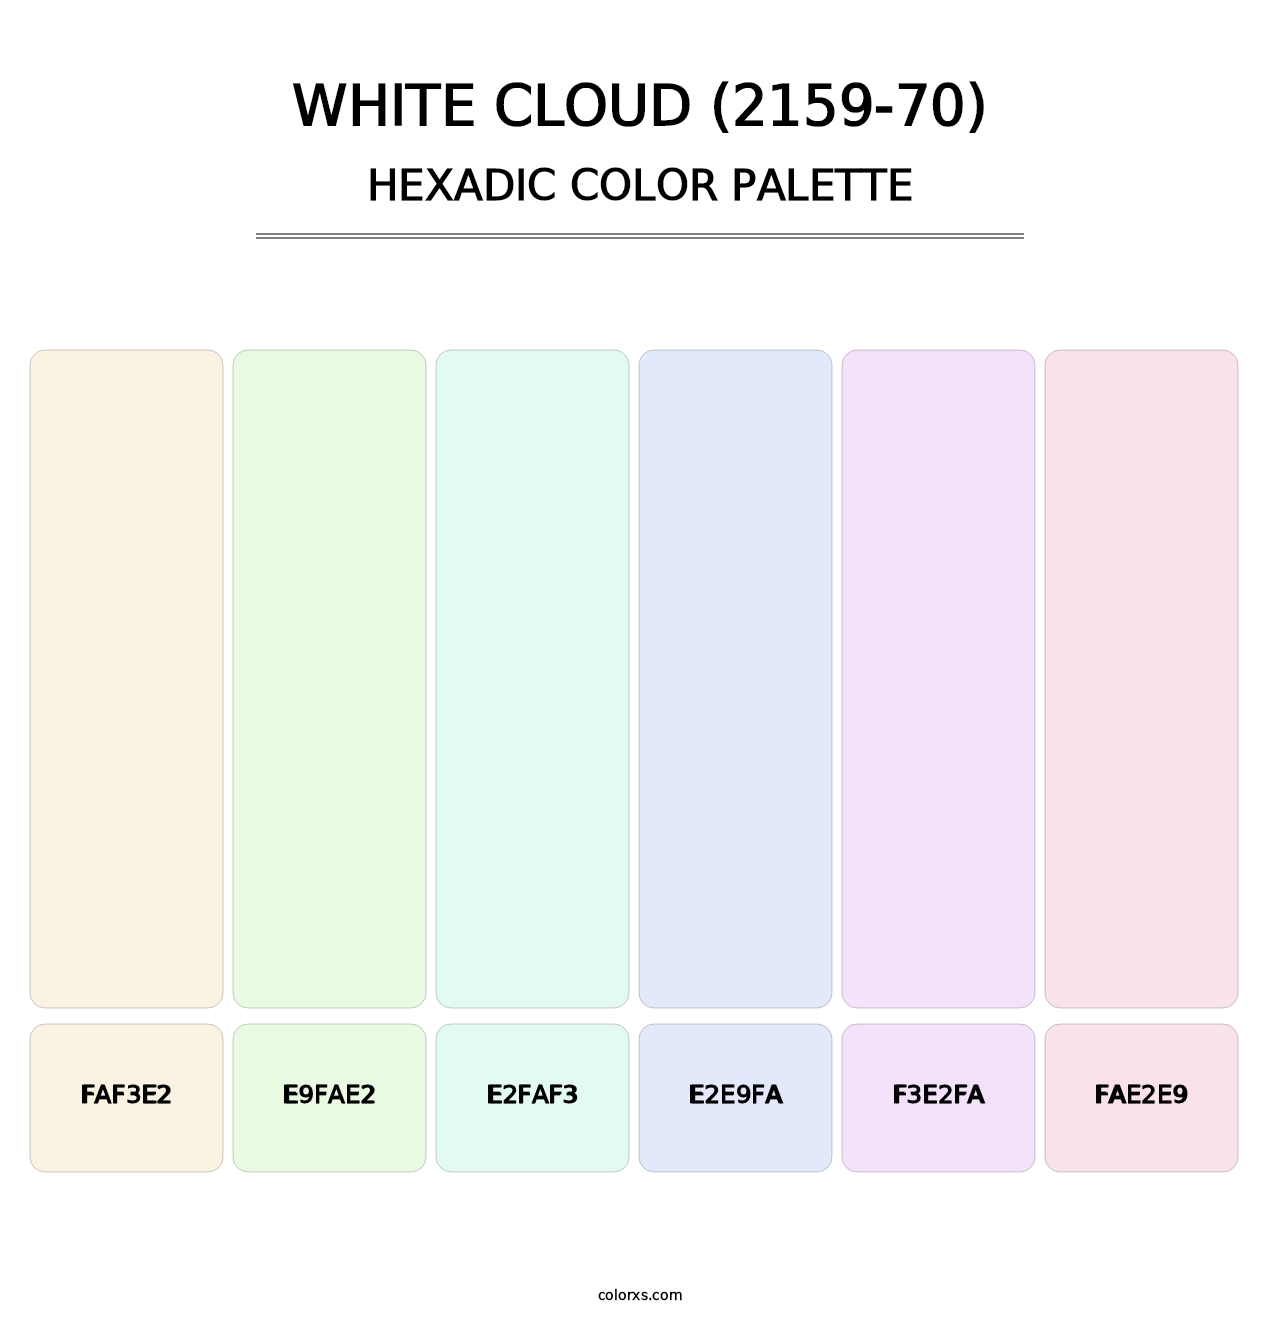 White Cloud (2159-70) - Hexadic Color Palette